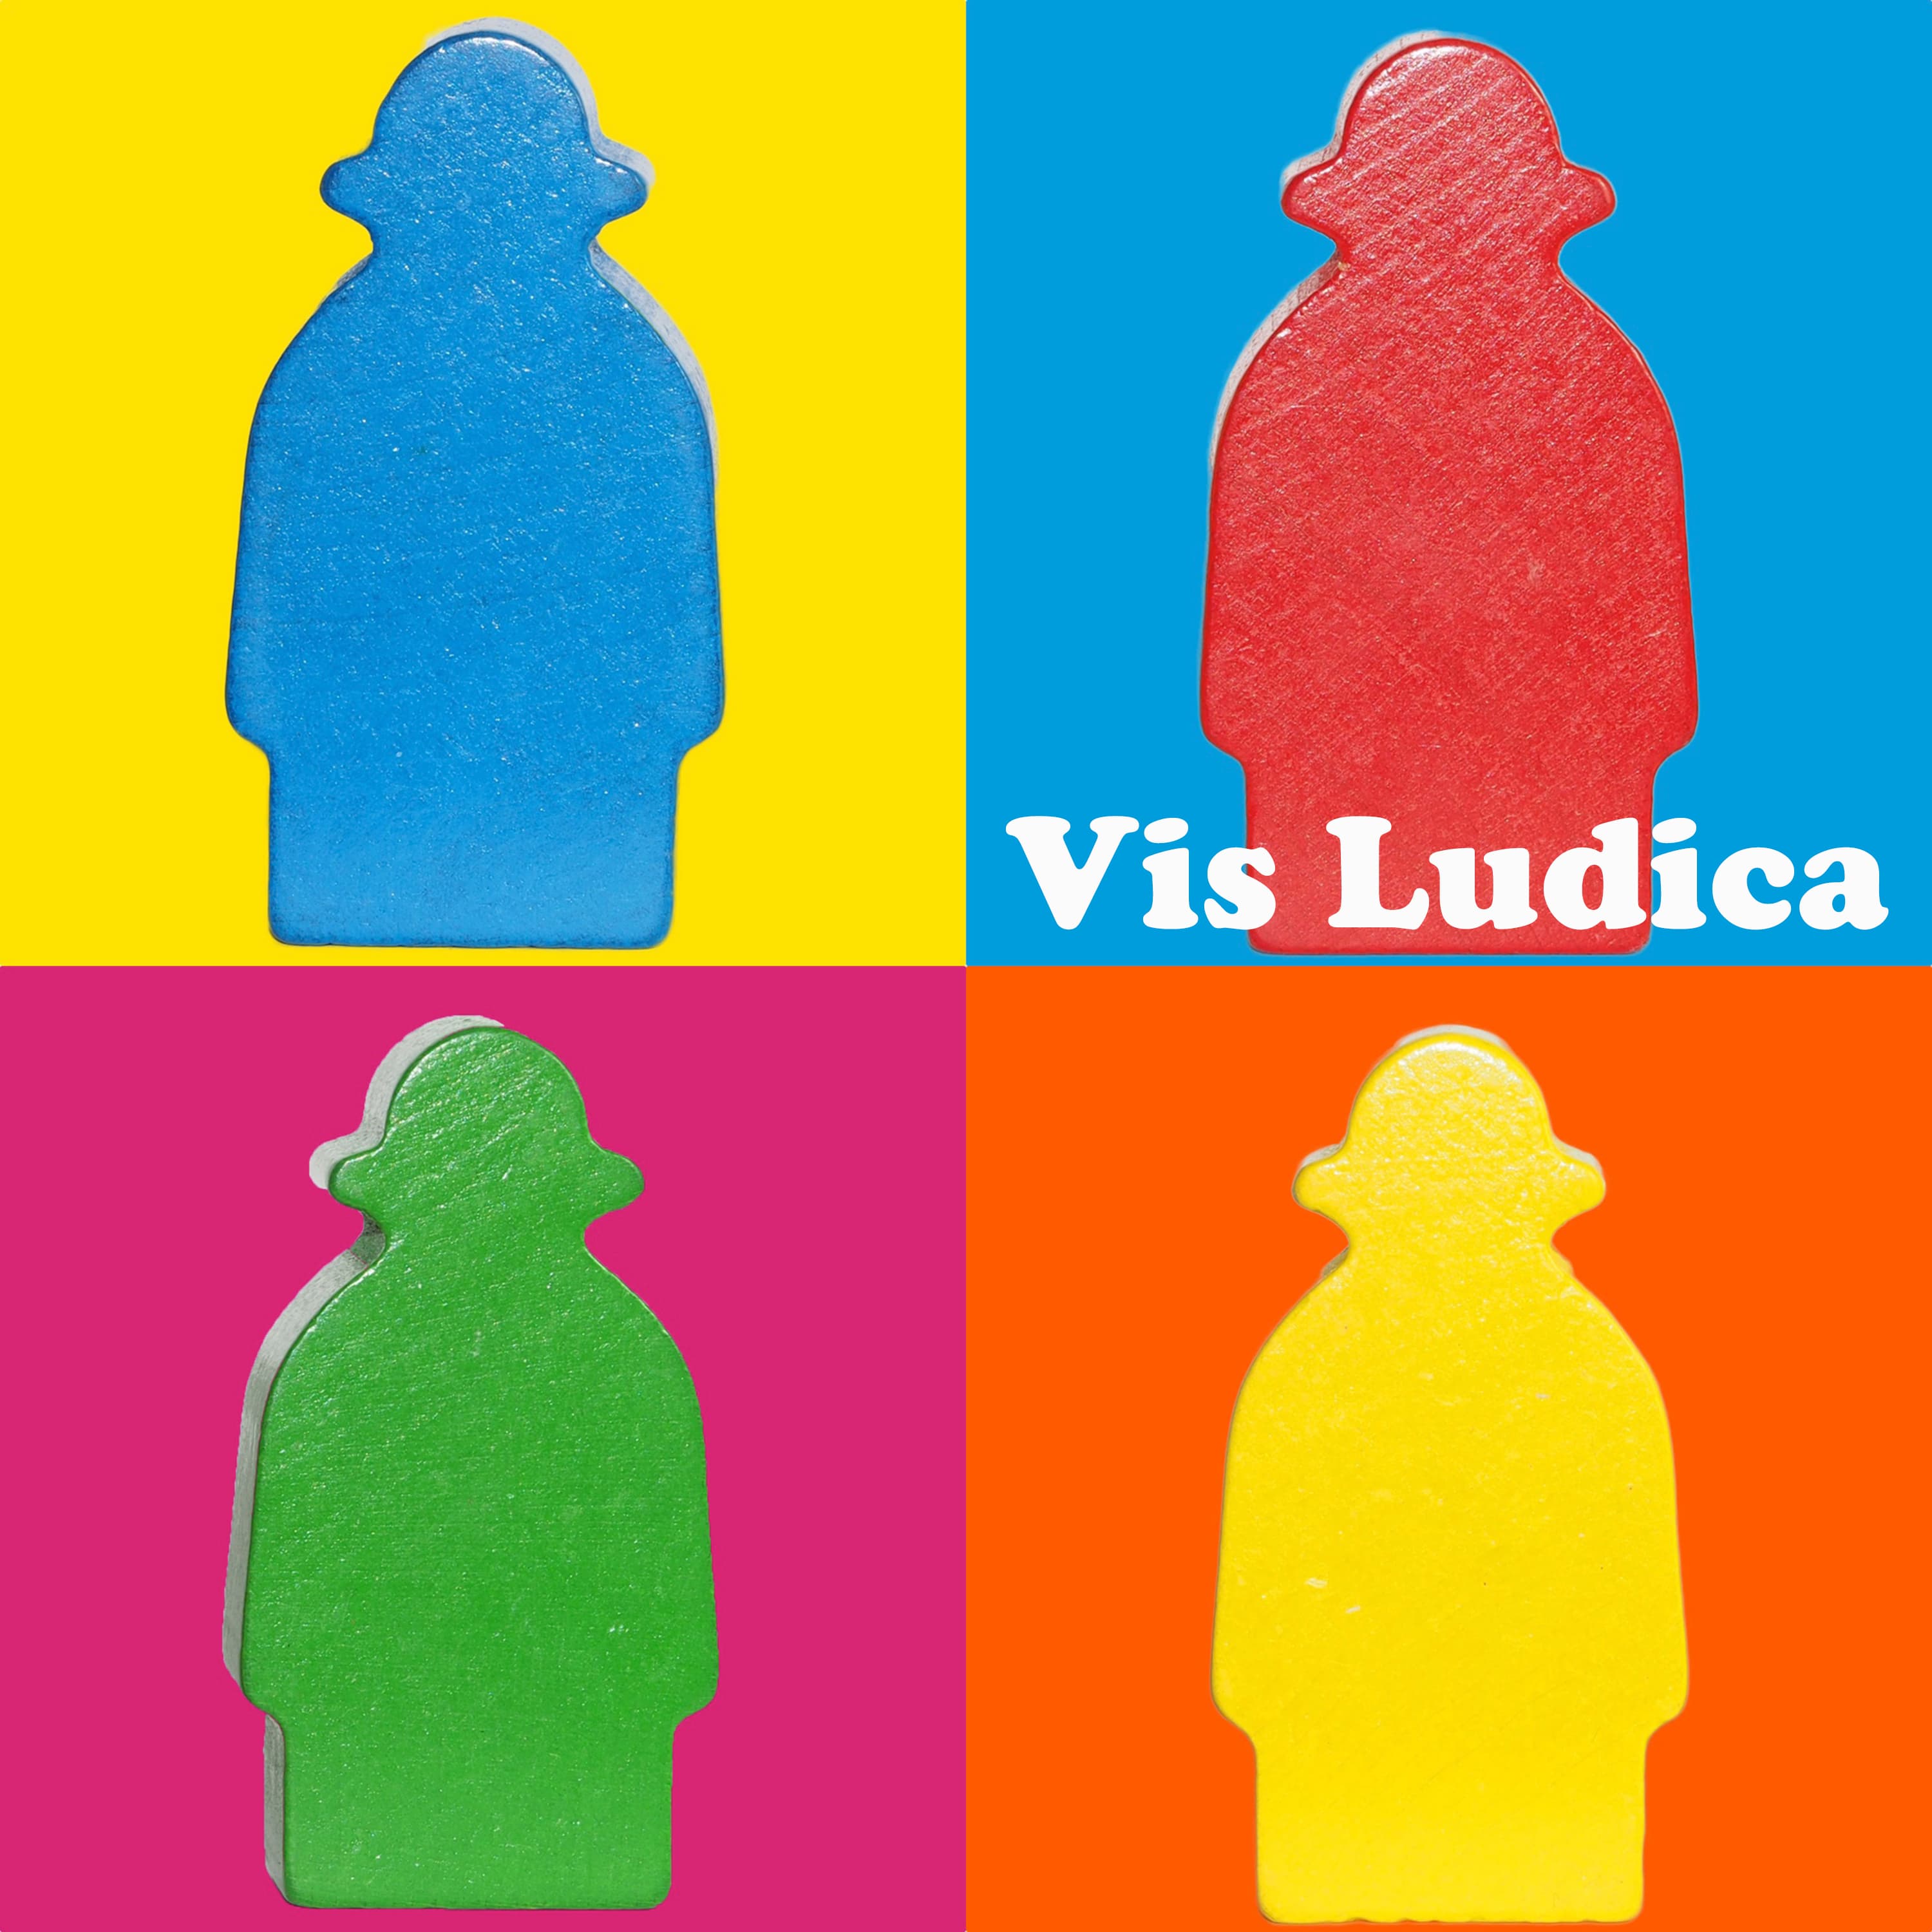 Vis Ludica's artwork